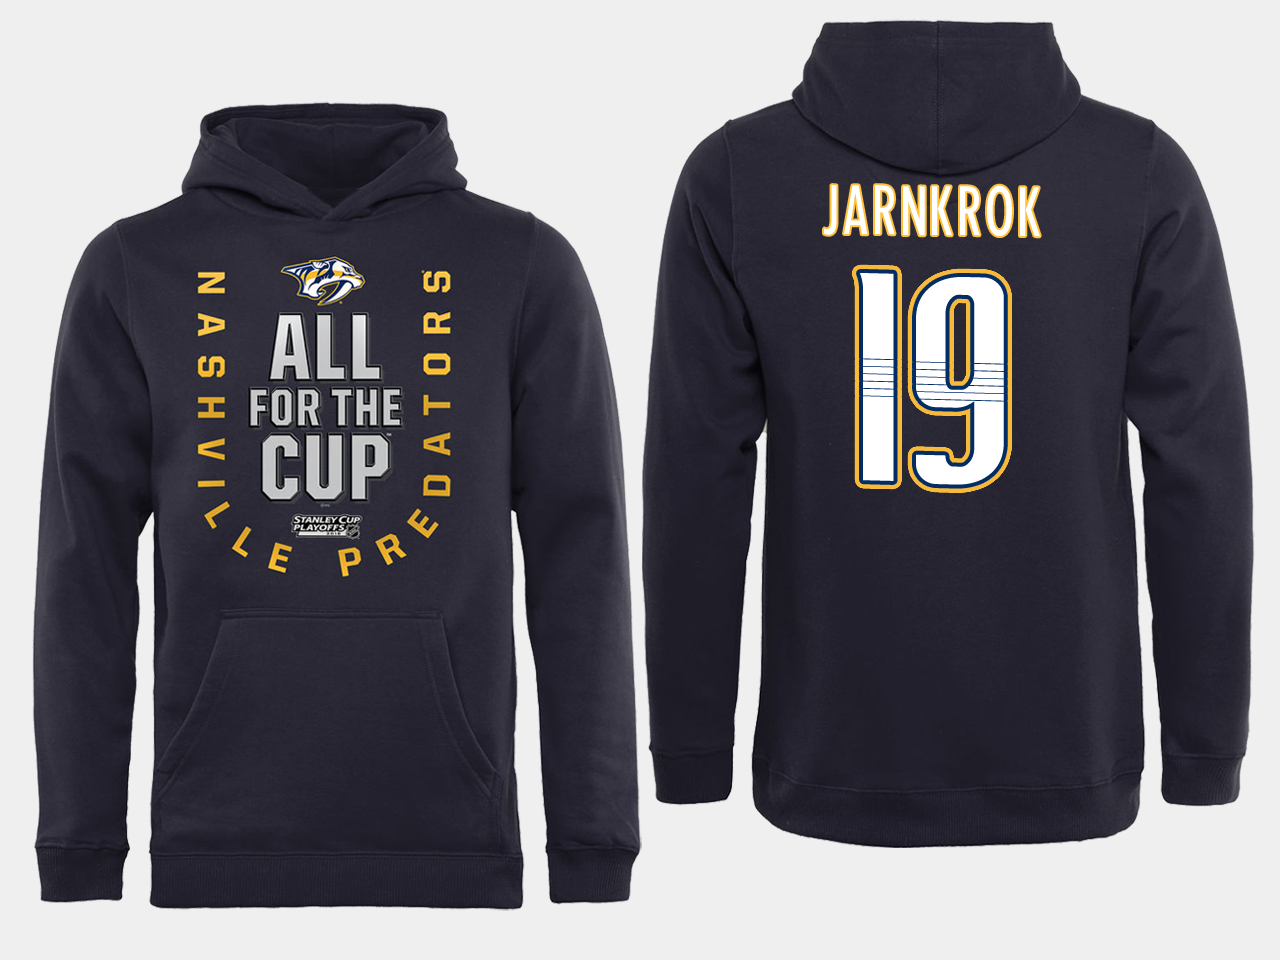 Men NHL Adidas Nashville Predators 19 Jarnkrok black ALL for the Cup hoodie